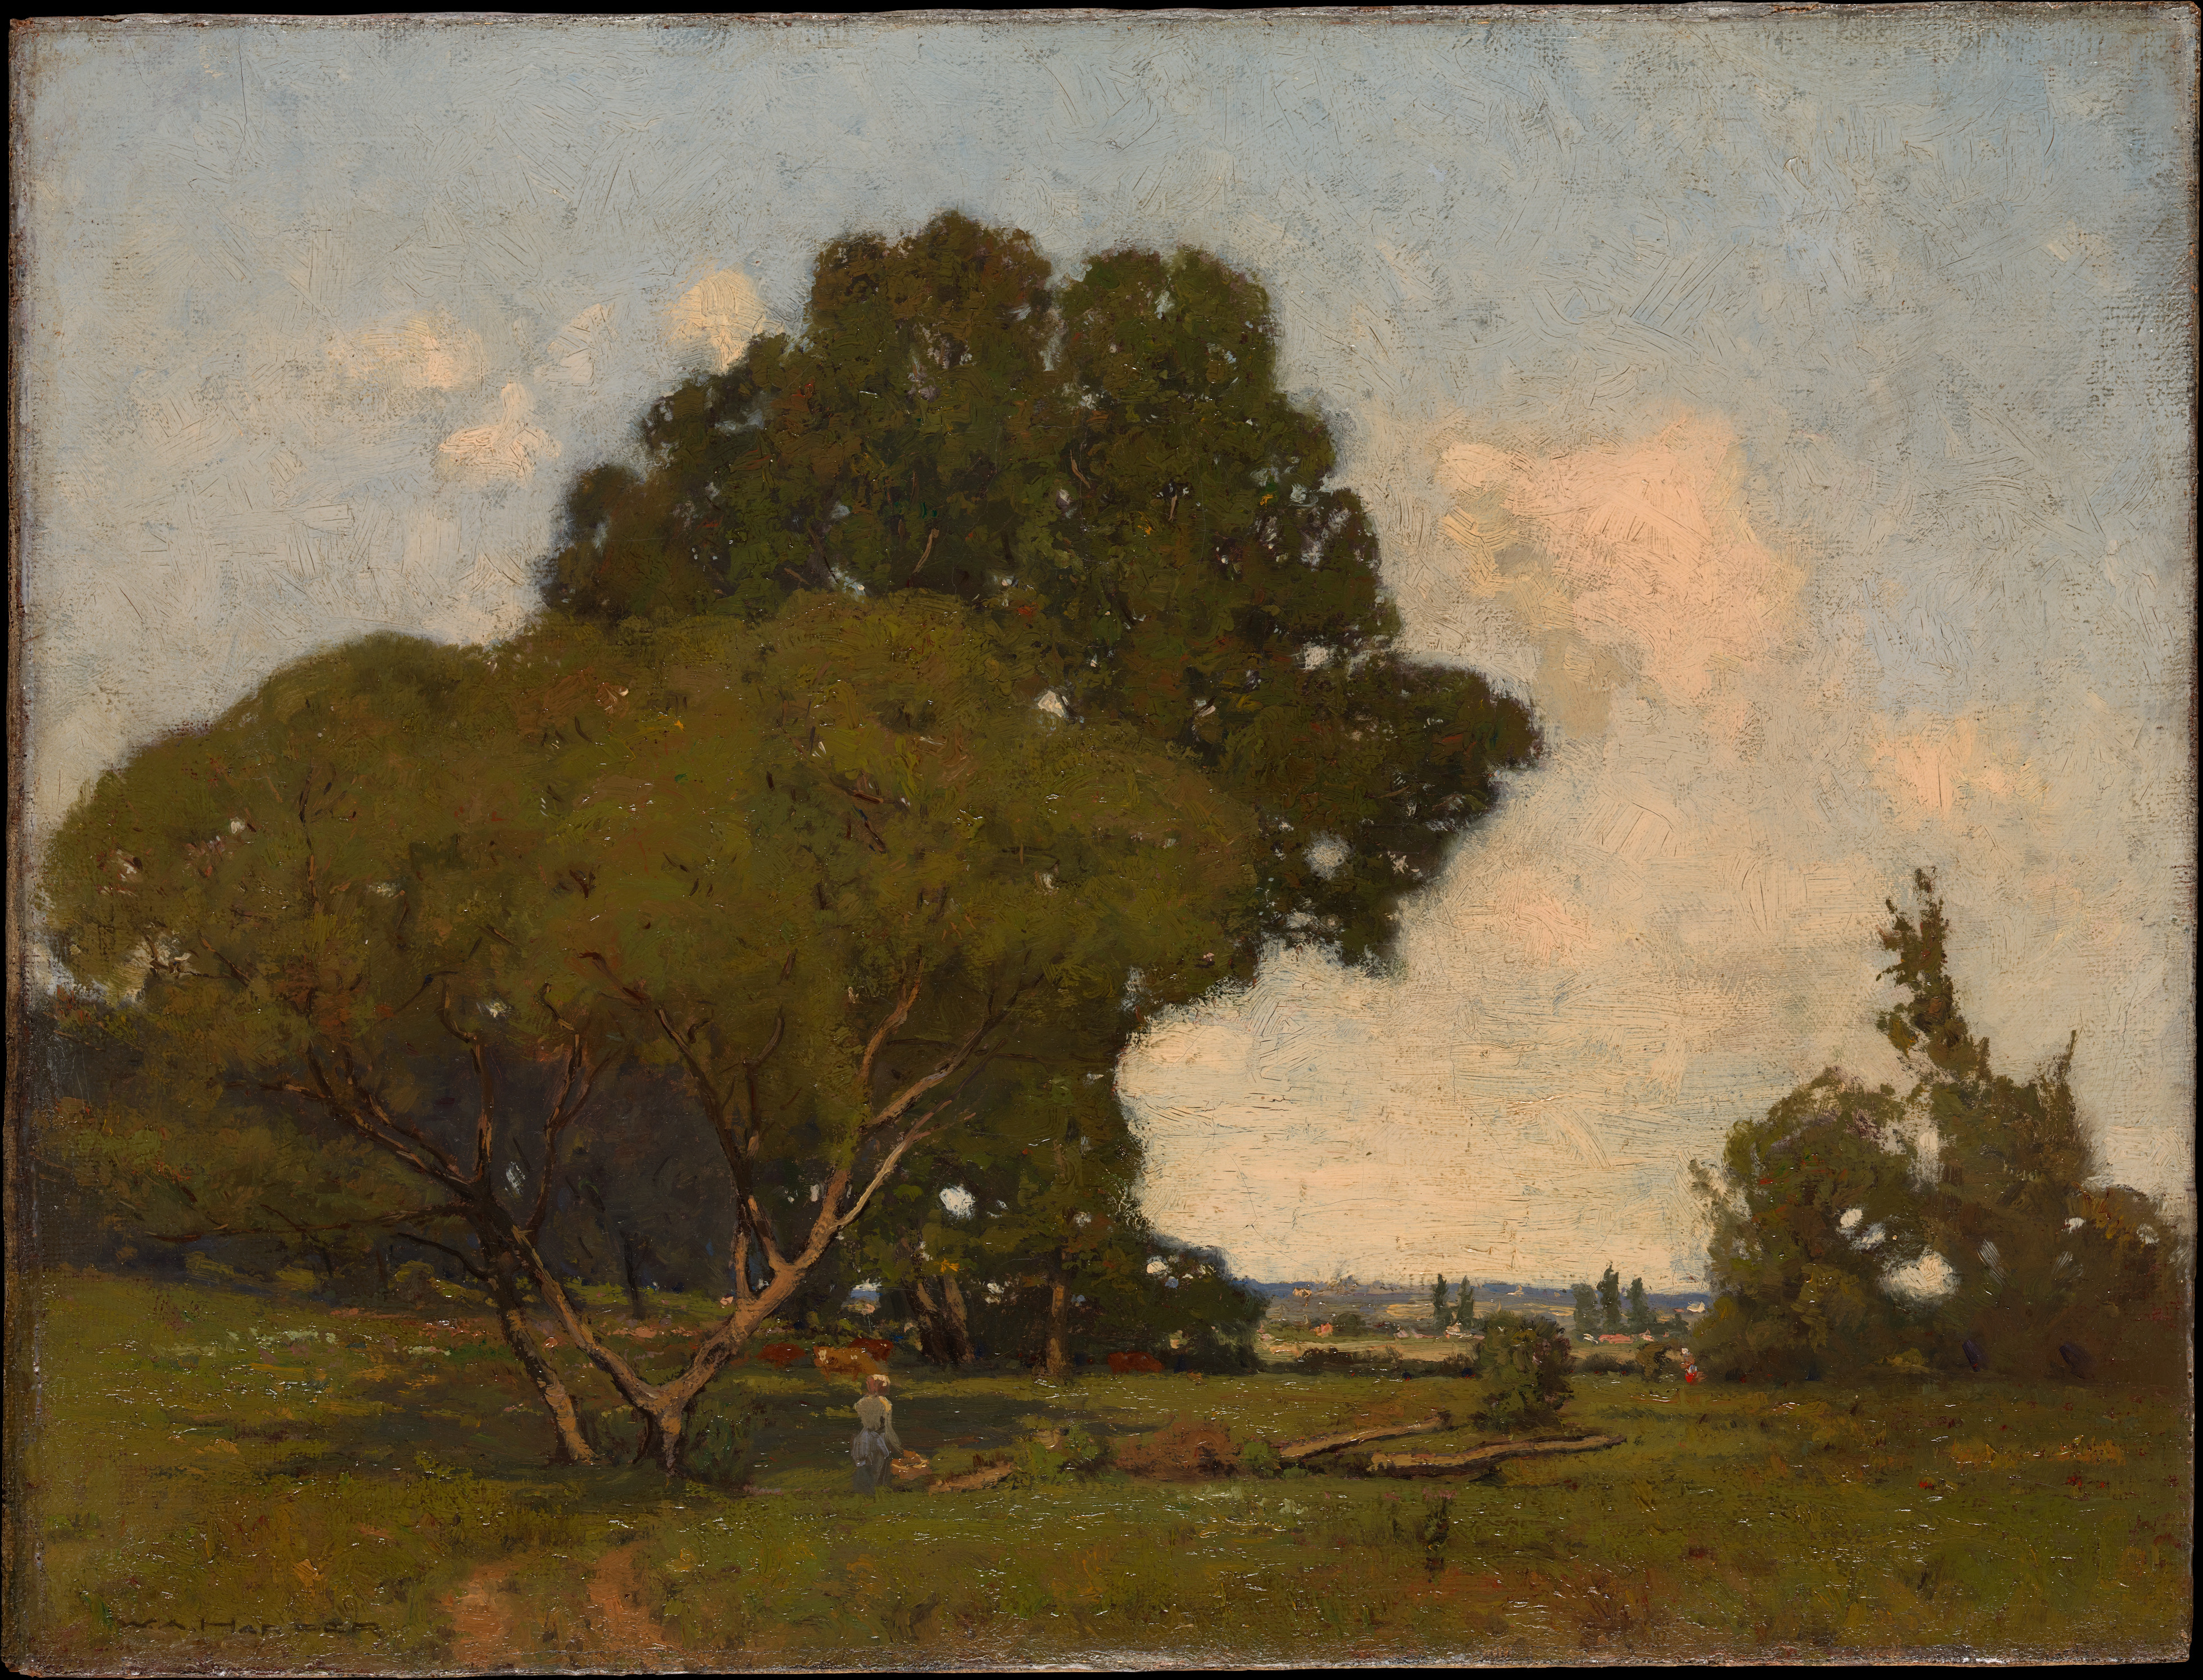 Ağaçlar, Erken Öğleden Sonra, Fransa (orig. "The Trees, Early Afternoon, France") by William A. Harper - 1905 civarı - 50,8 × 66 cm 